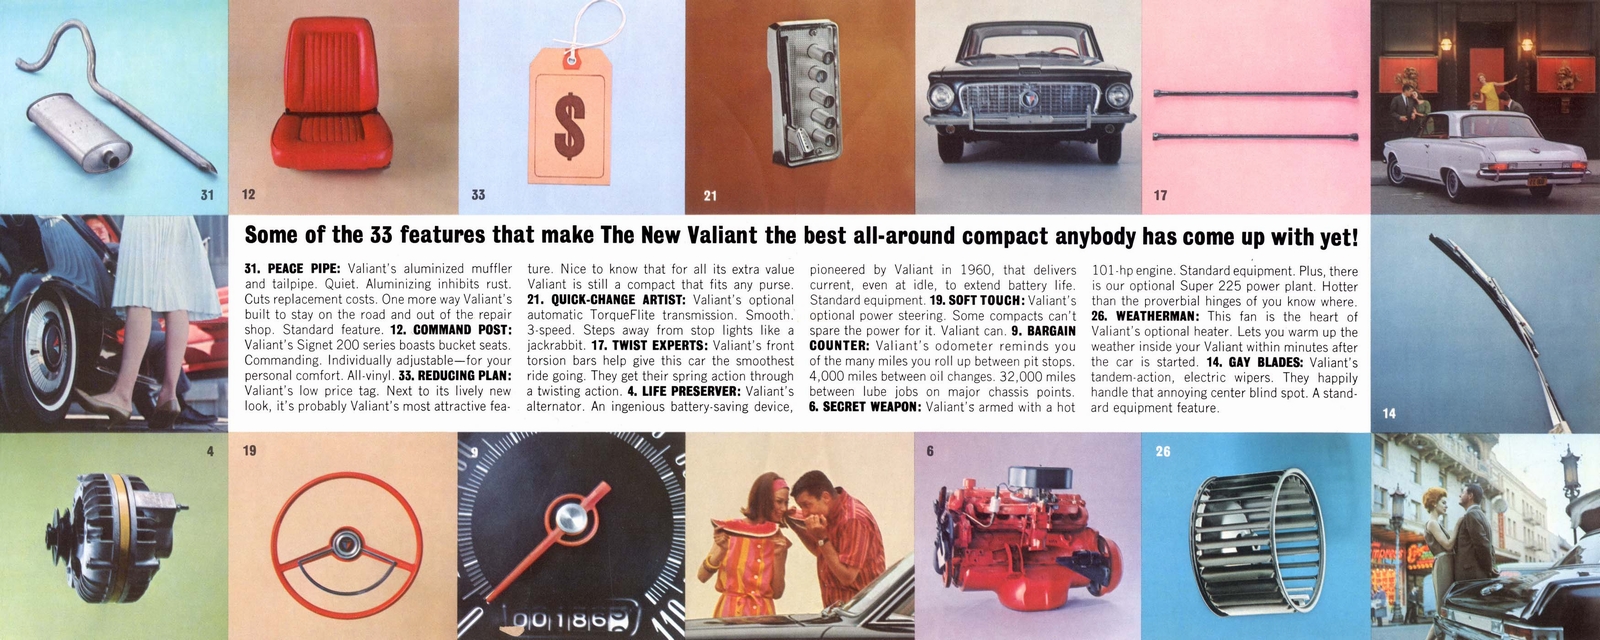 n_1963 Plymouth Valiant Folder-03.jpg